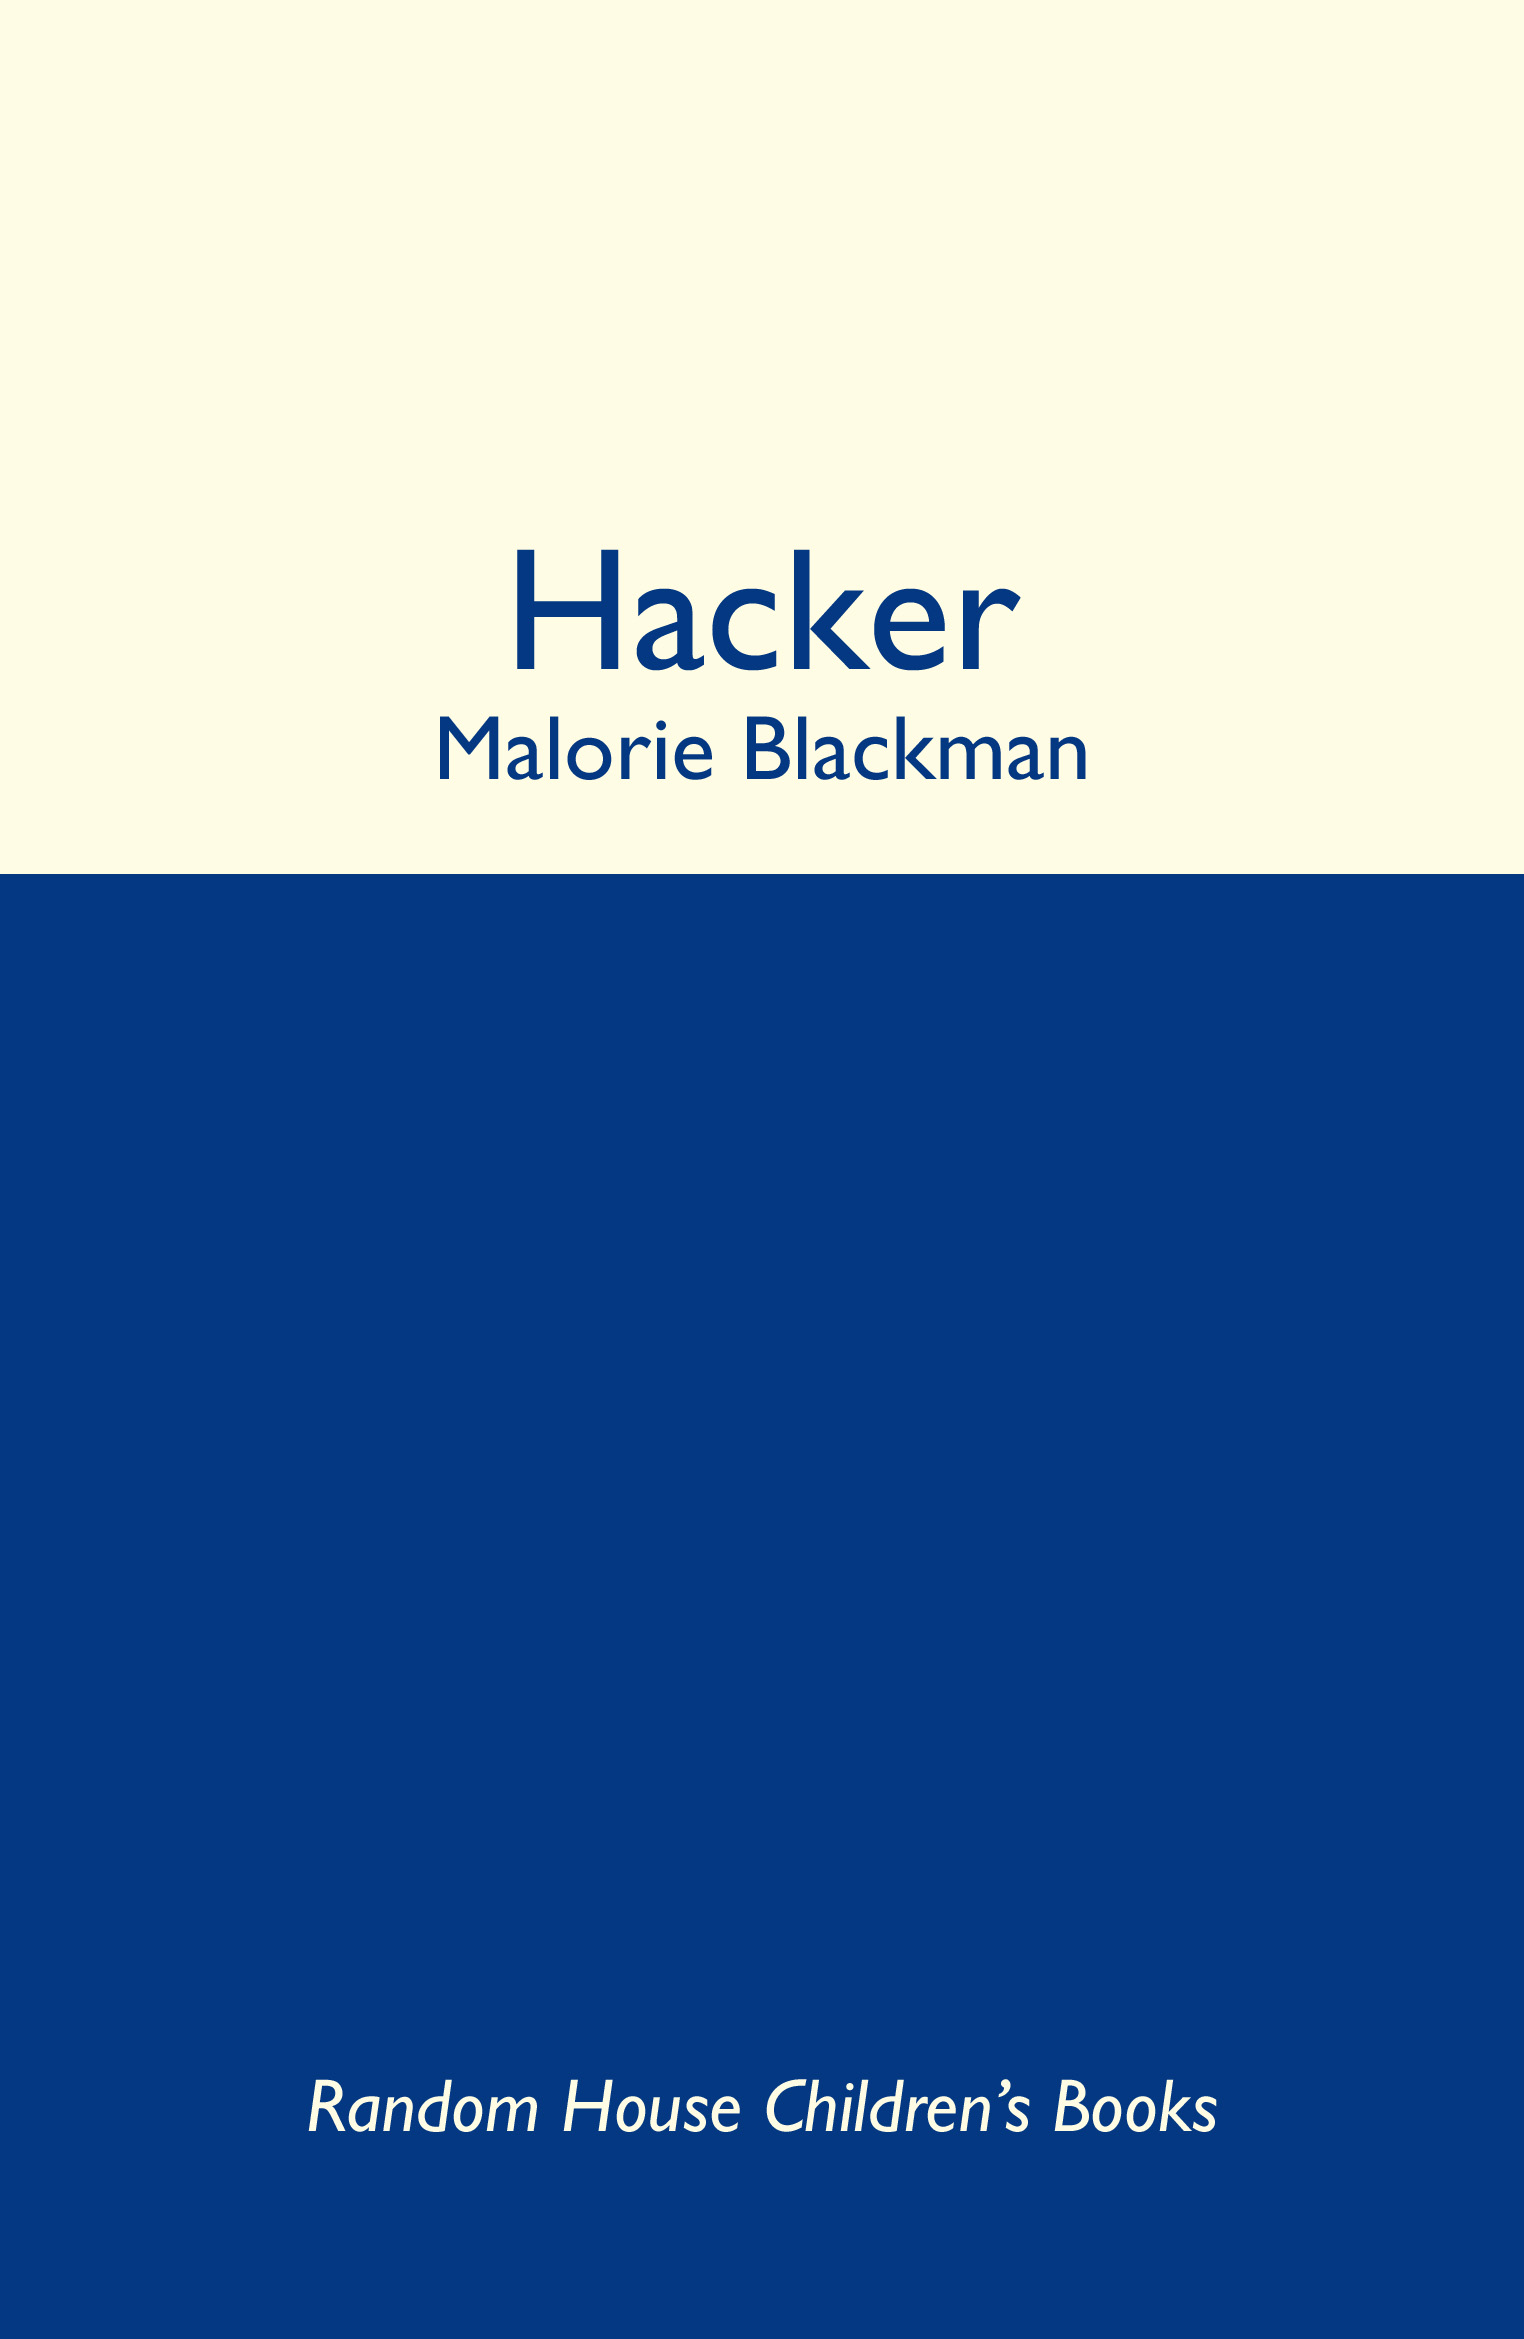 Hacker by Malorie Blackman